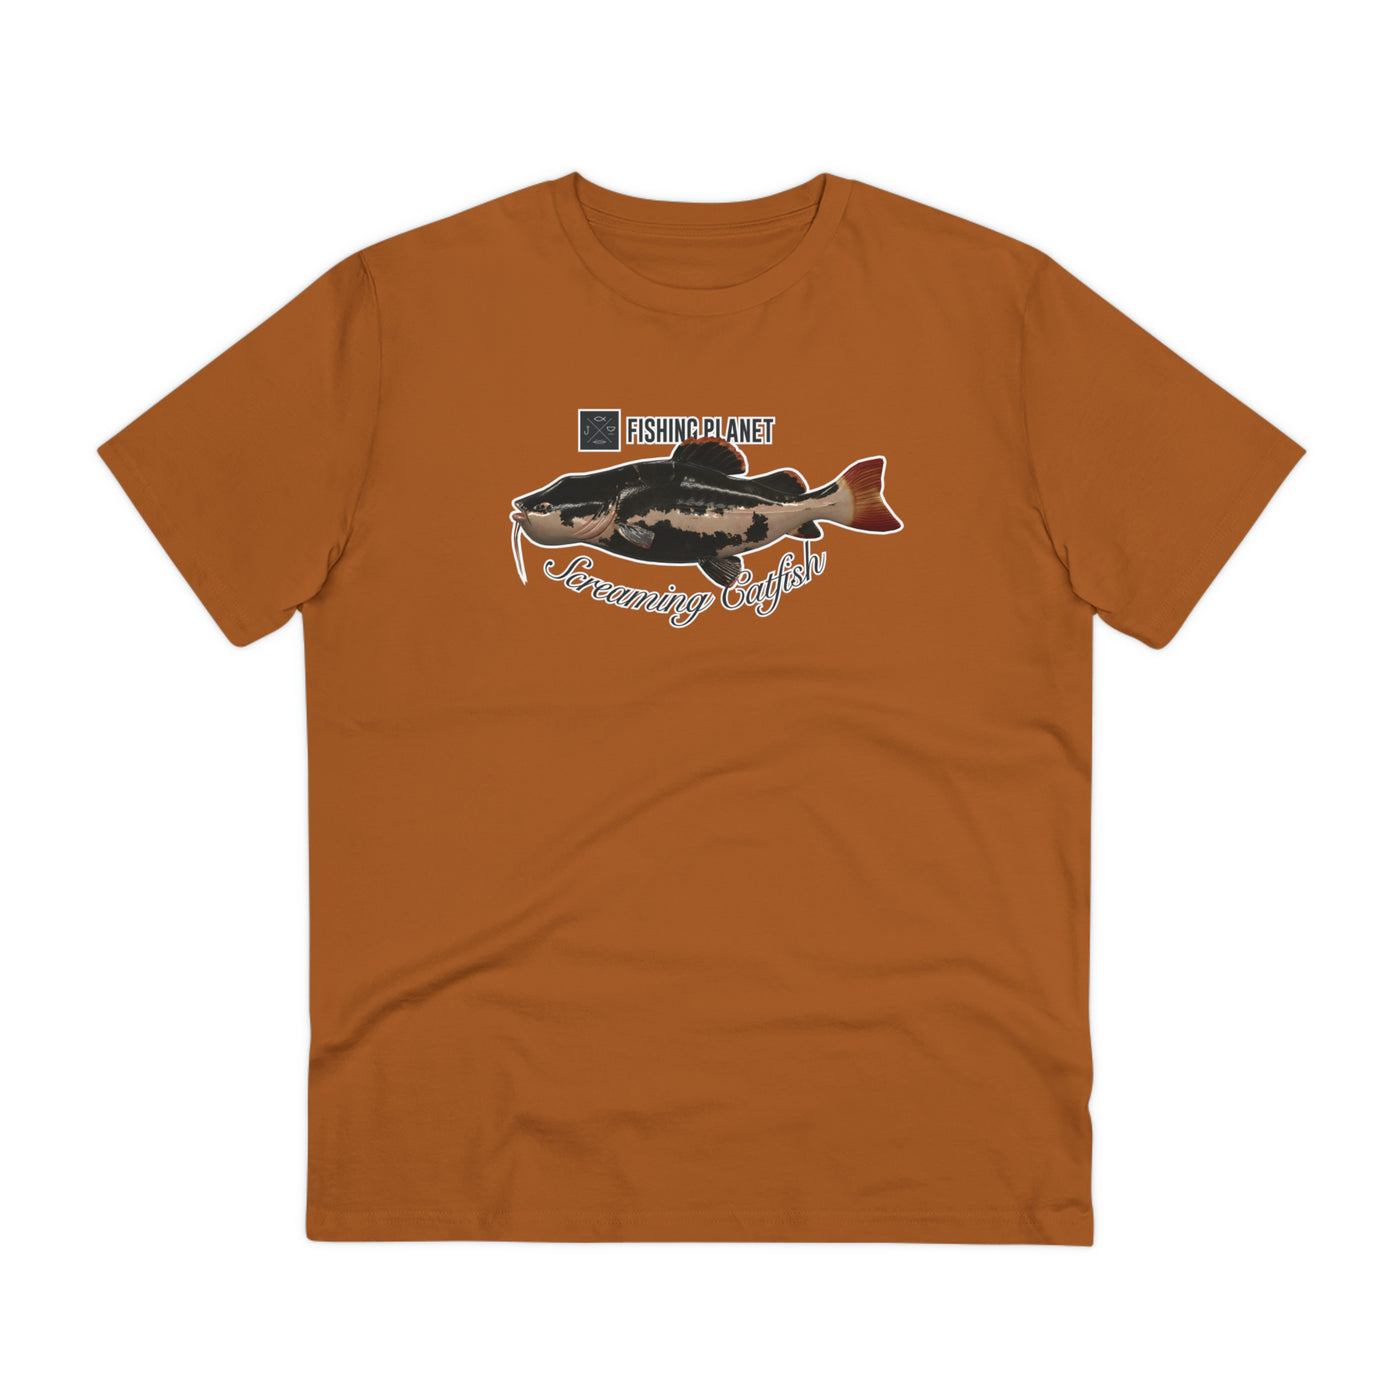 Fishing Planet Screaming Catfish T-shirt